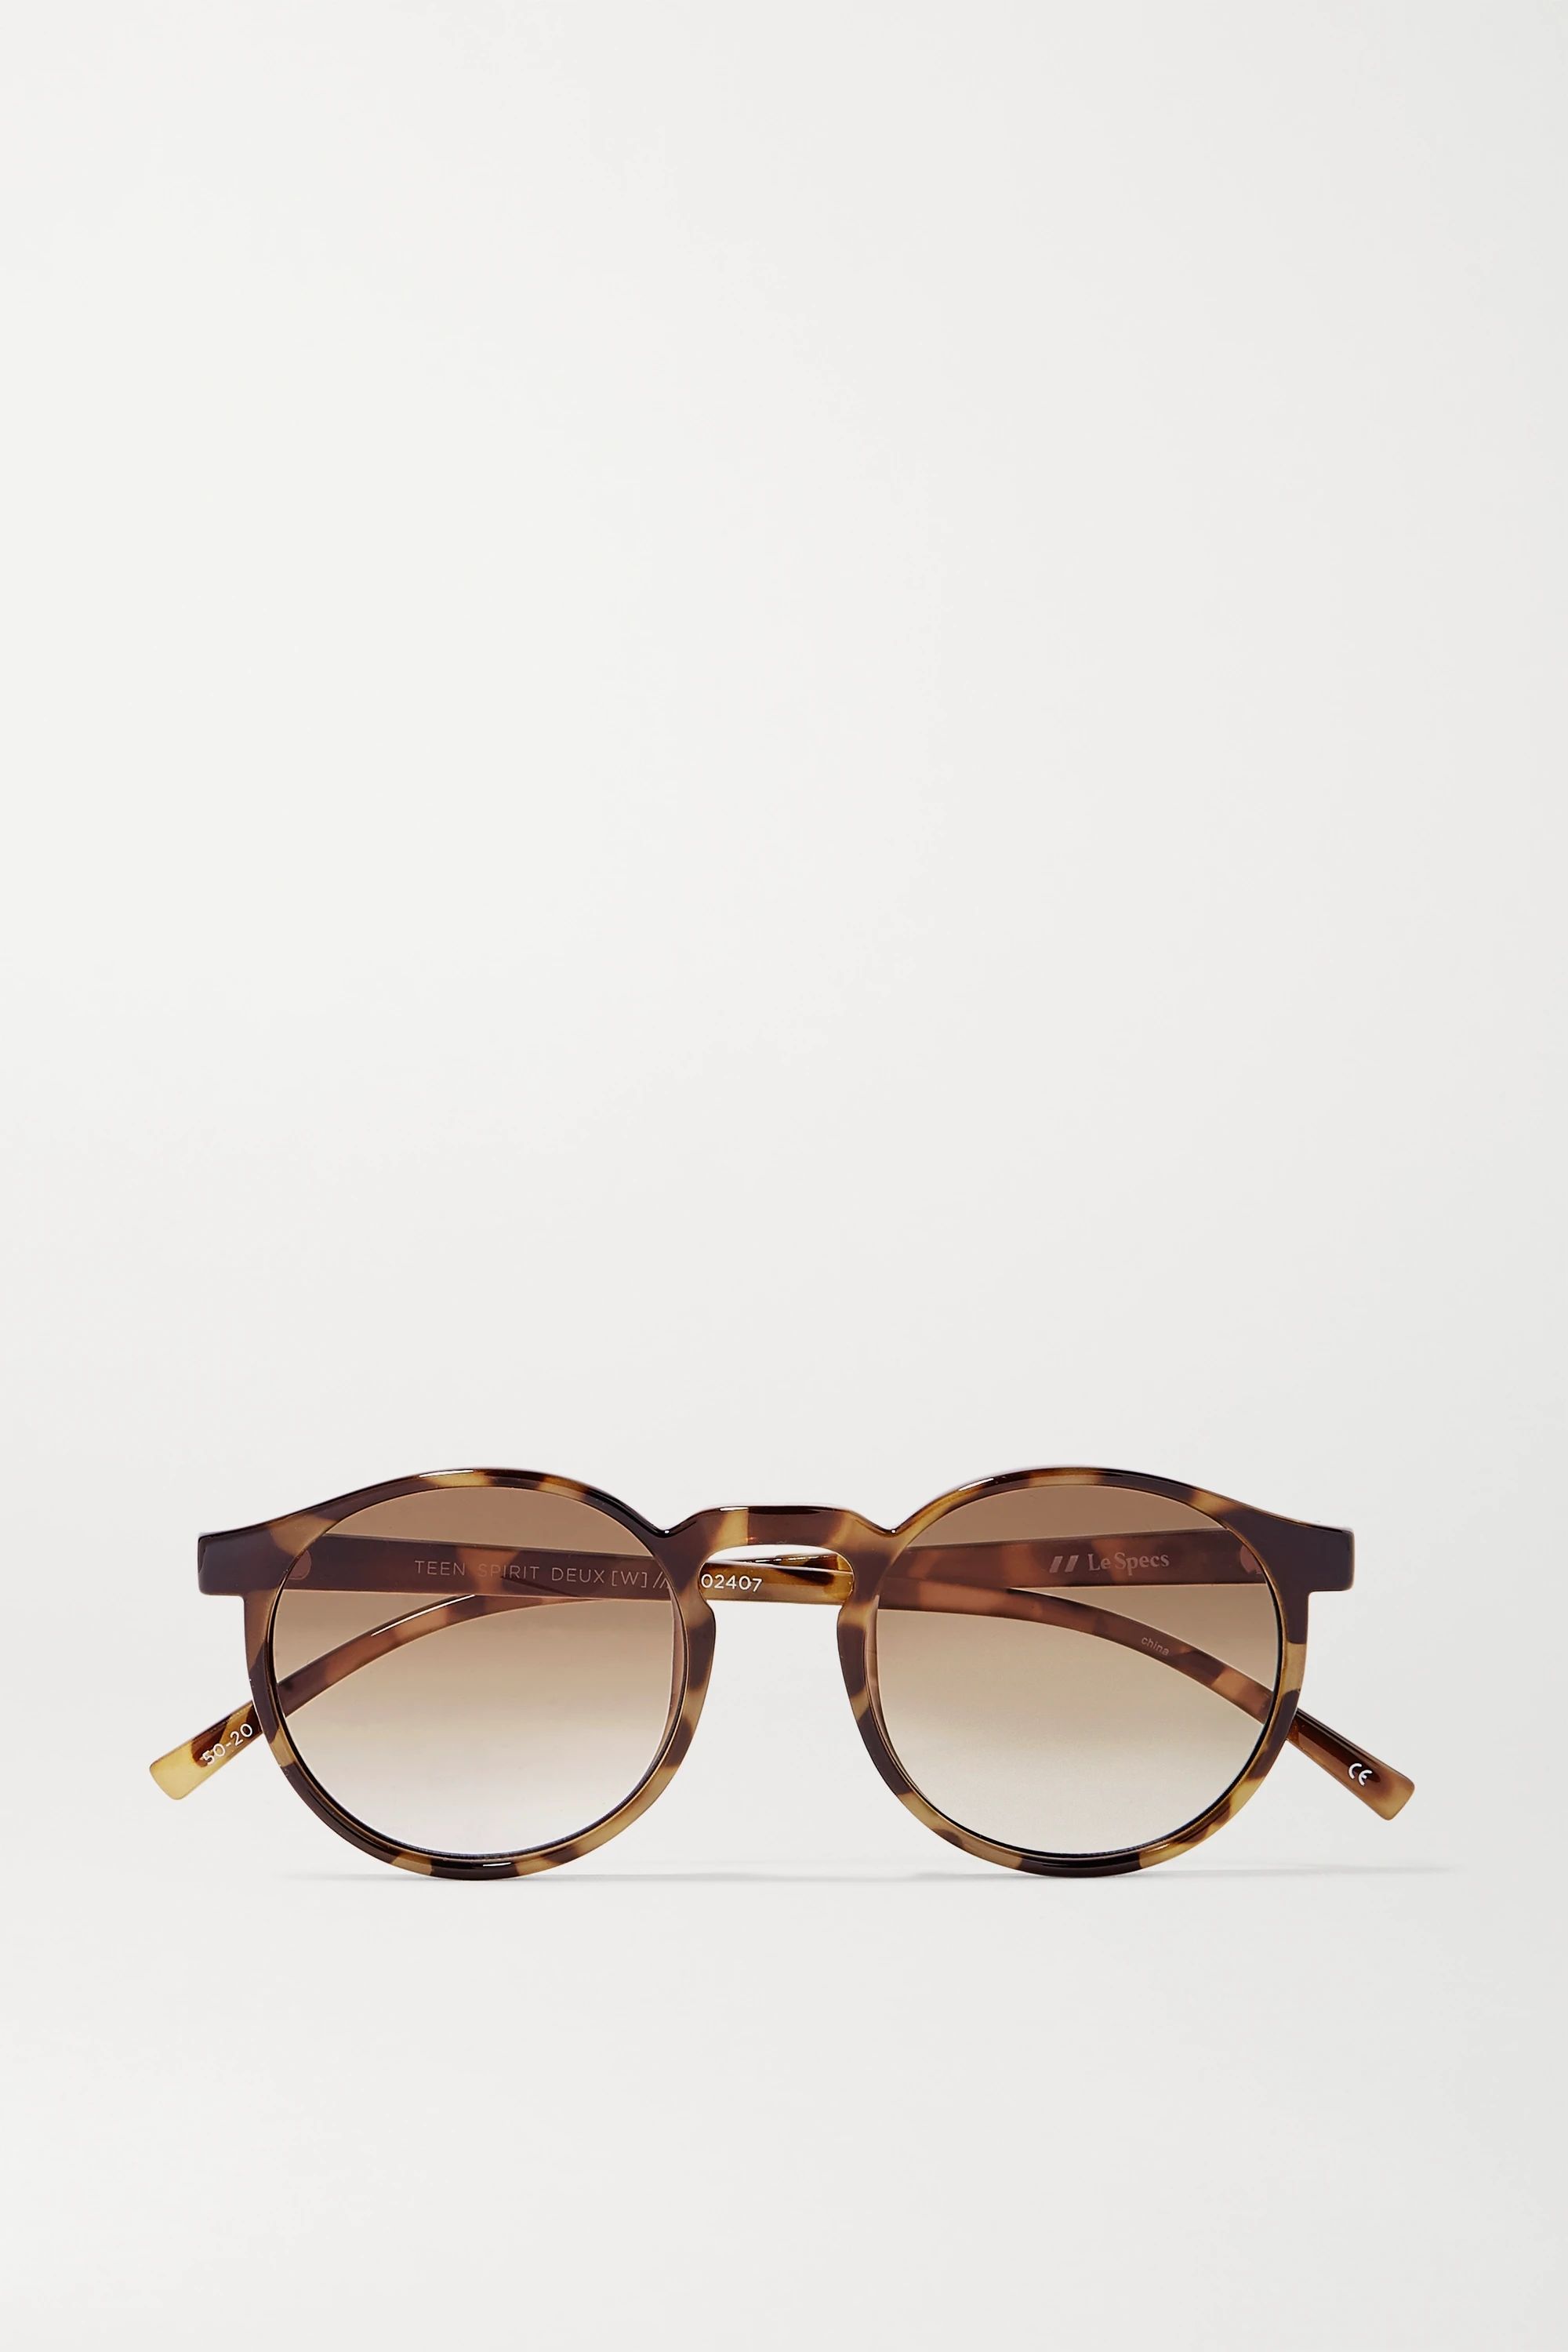 Teen Spirit Deux round-frame tortoiseshell acetate sunglasses | NET-A-PORTER (UK & EU)